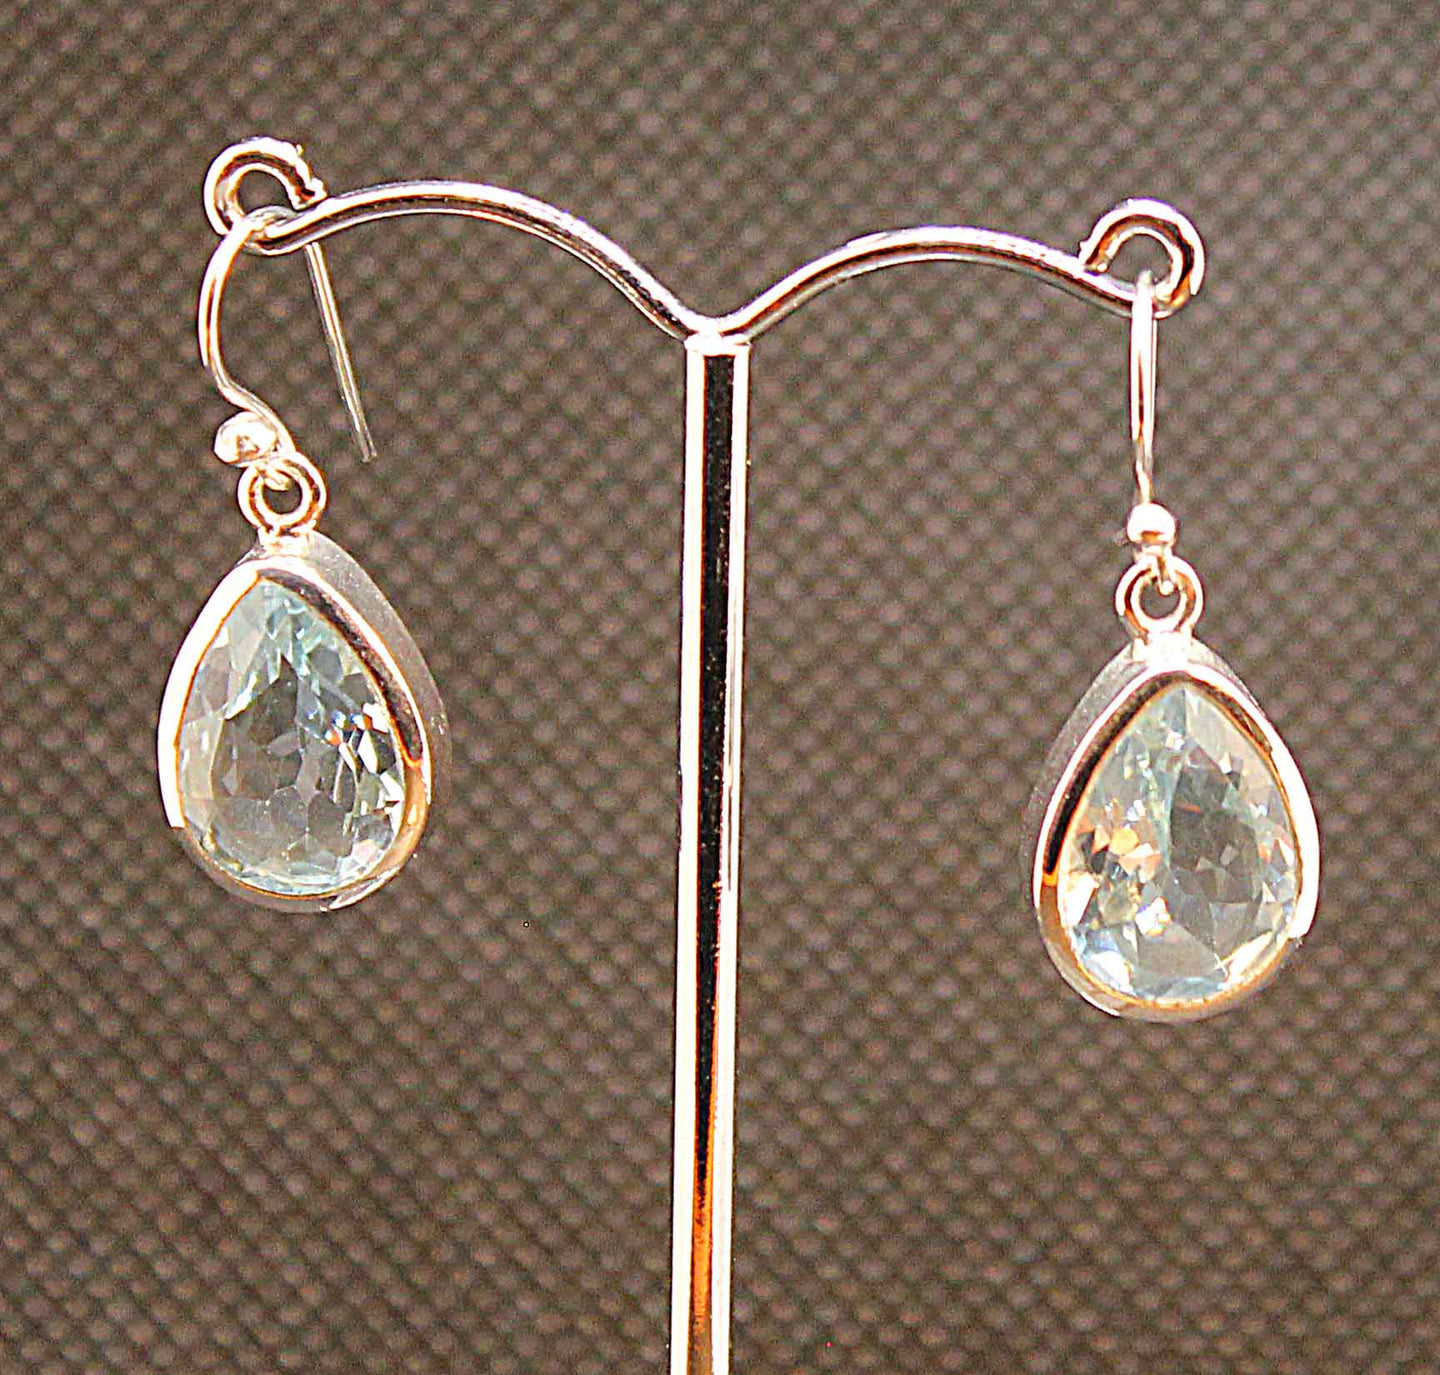 Genuine large blue topaz earrings in sterling silver